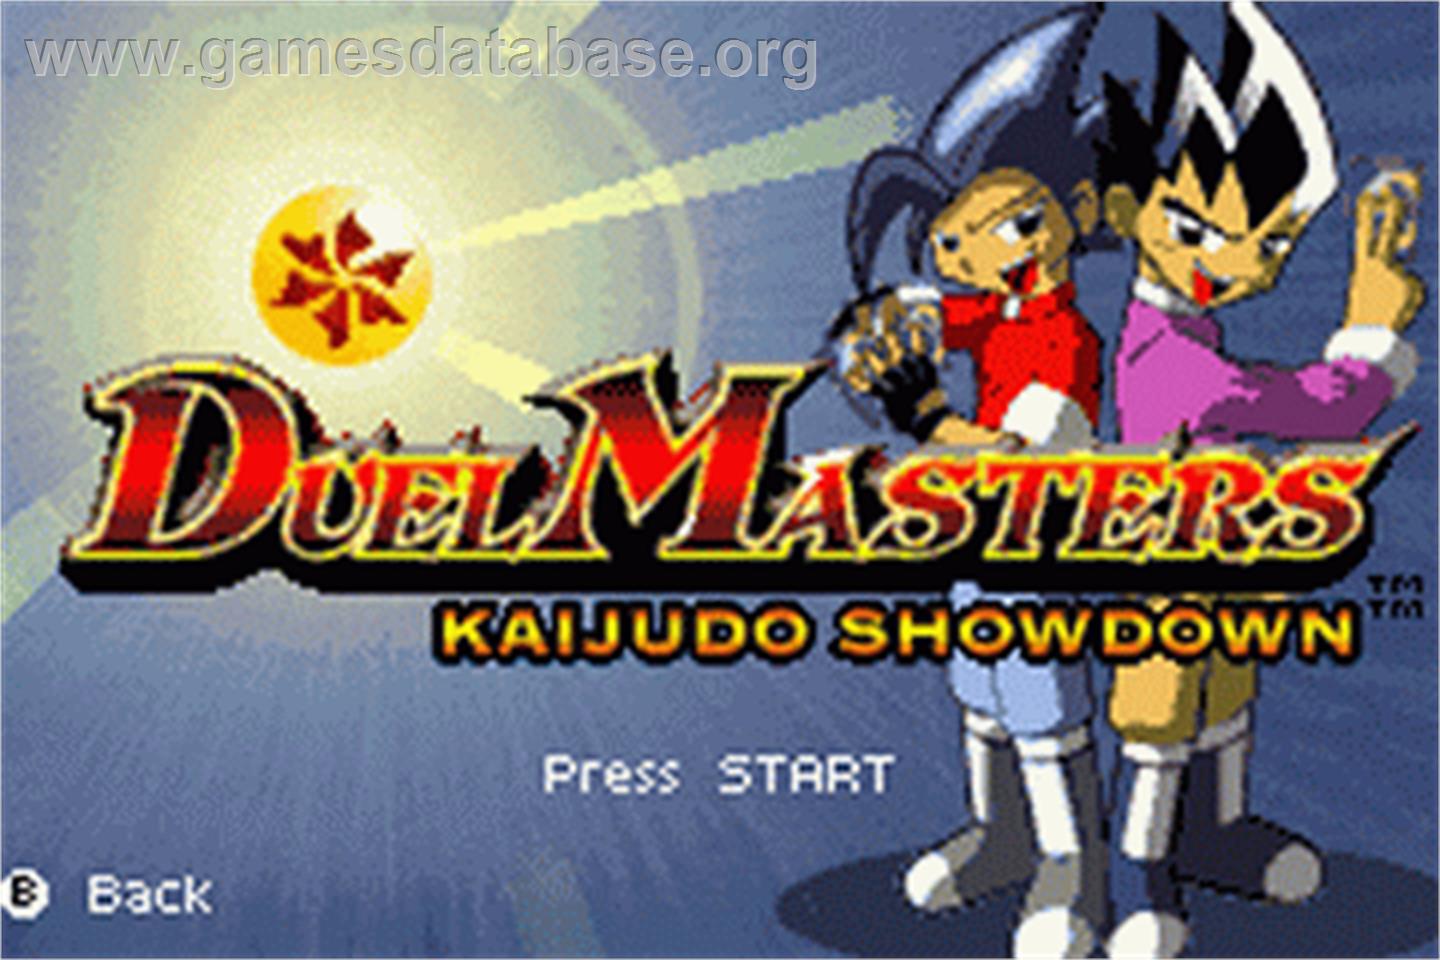 Duel Masters Kaijudo Showdown - Nintendo Game Boy Advance - Artwork - Title Screen